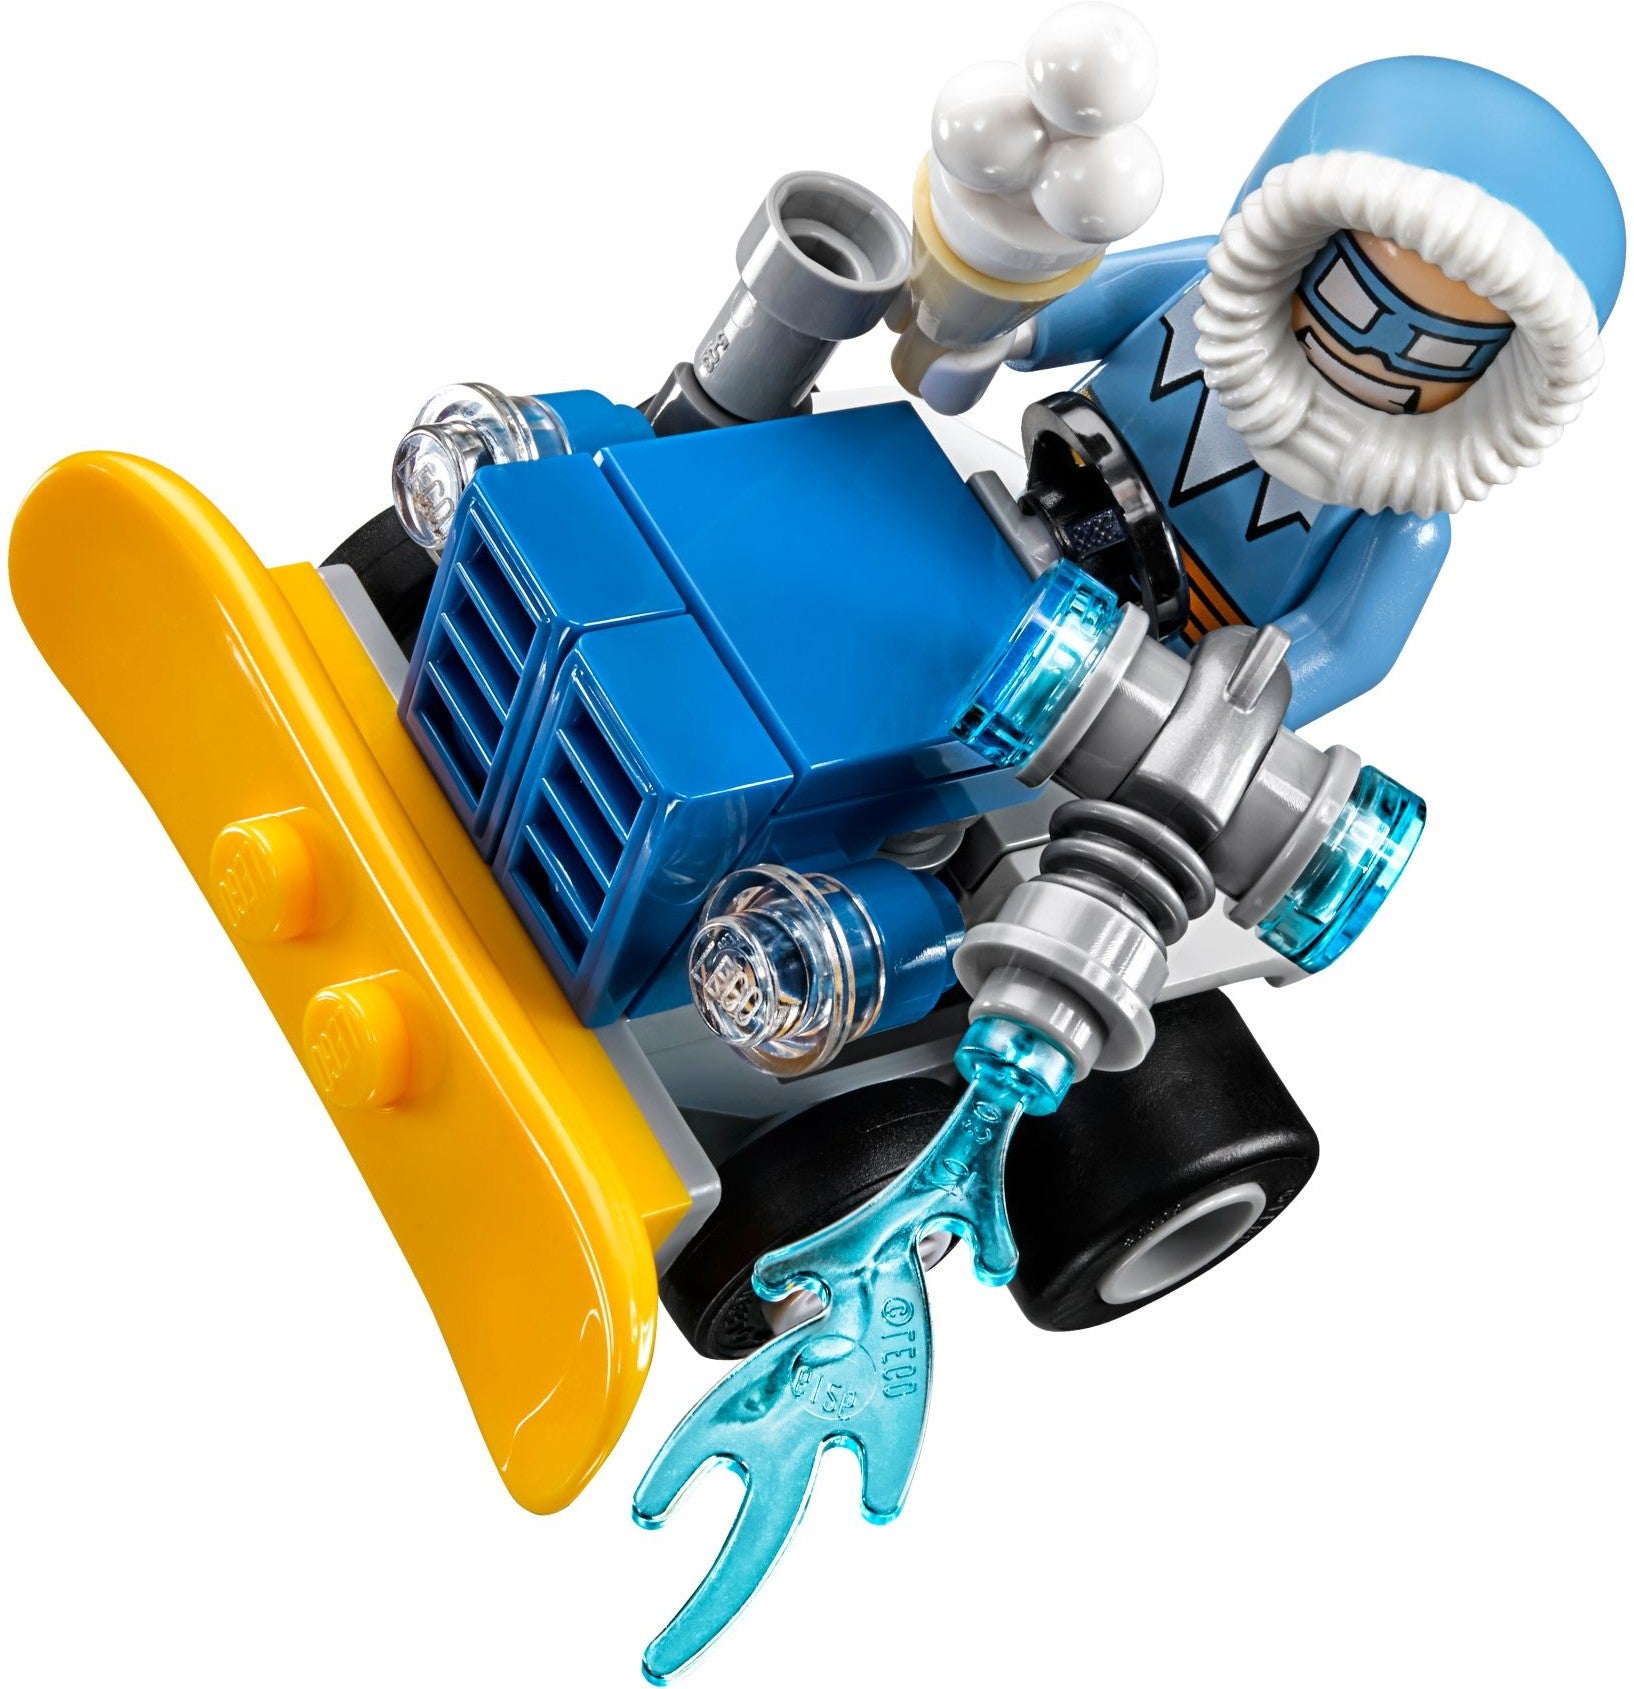 håber Arashigaoka Slagskib Lego Mighty Micros: he Flash vs. Captain Cold - 76063 – Display Frames for  Lego Minifigures